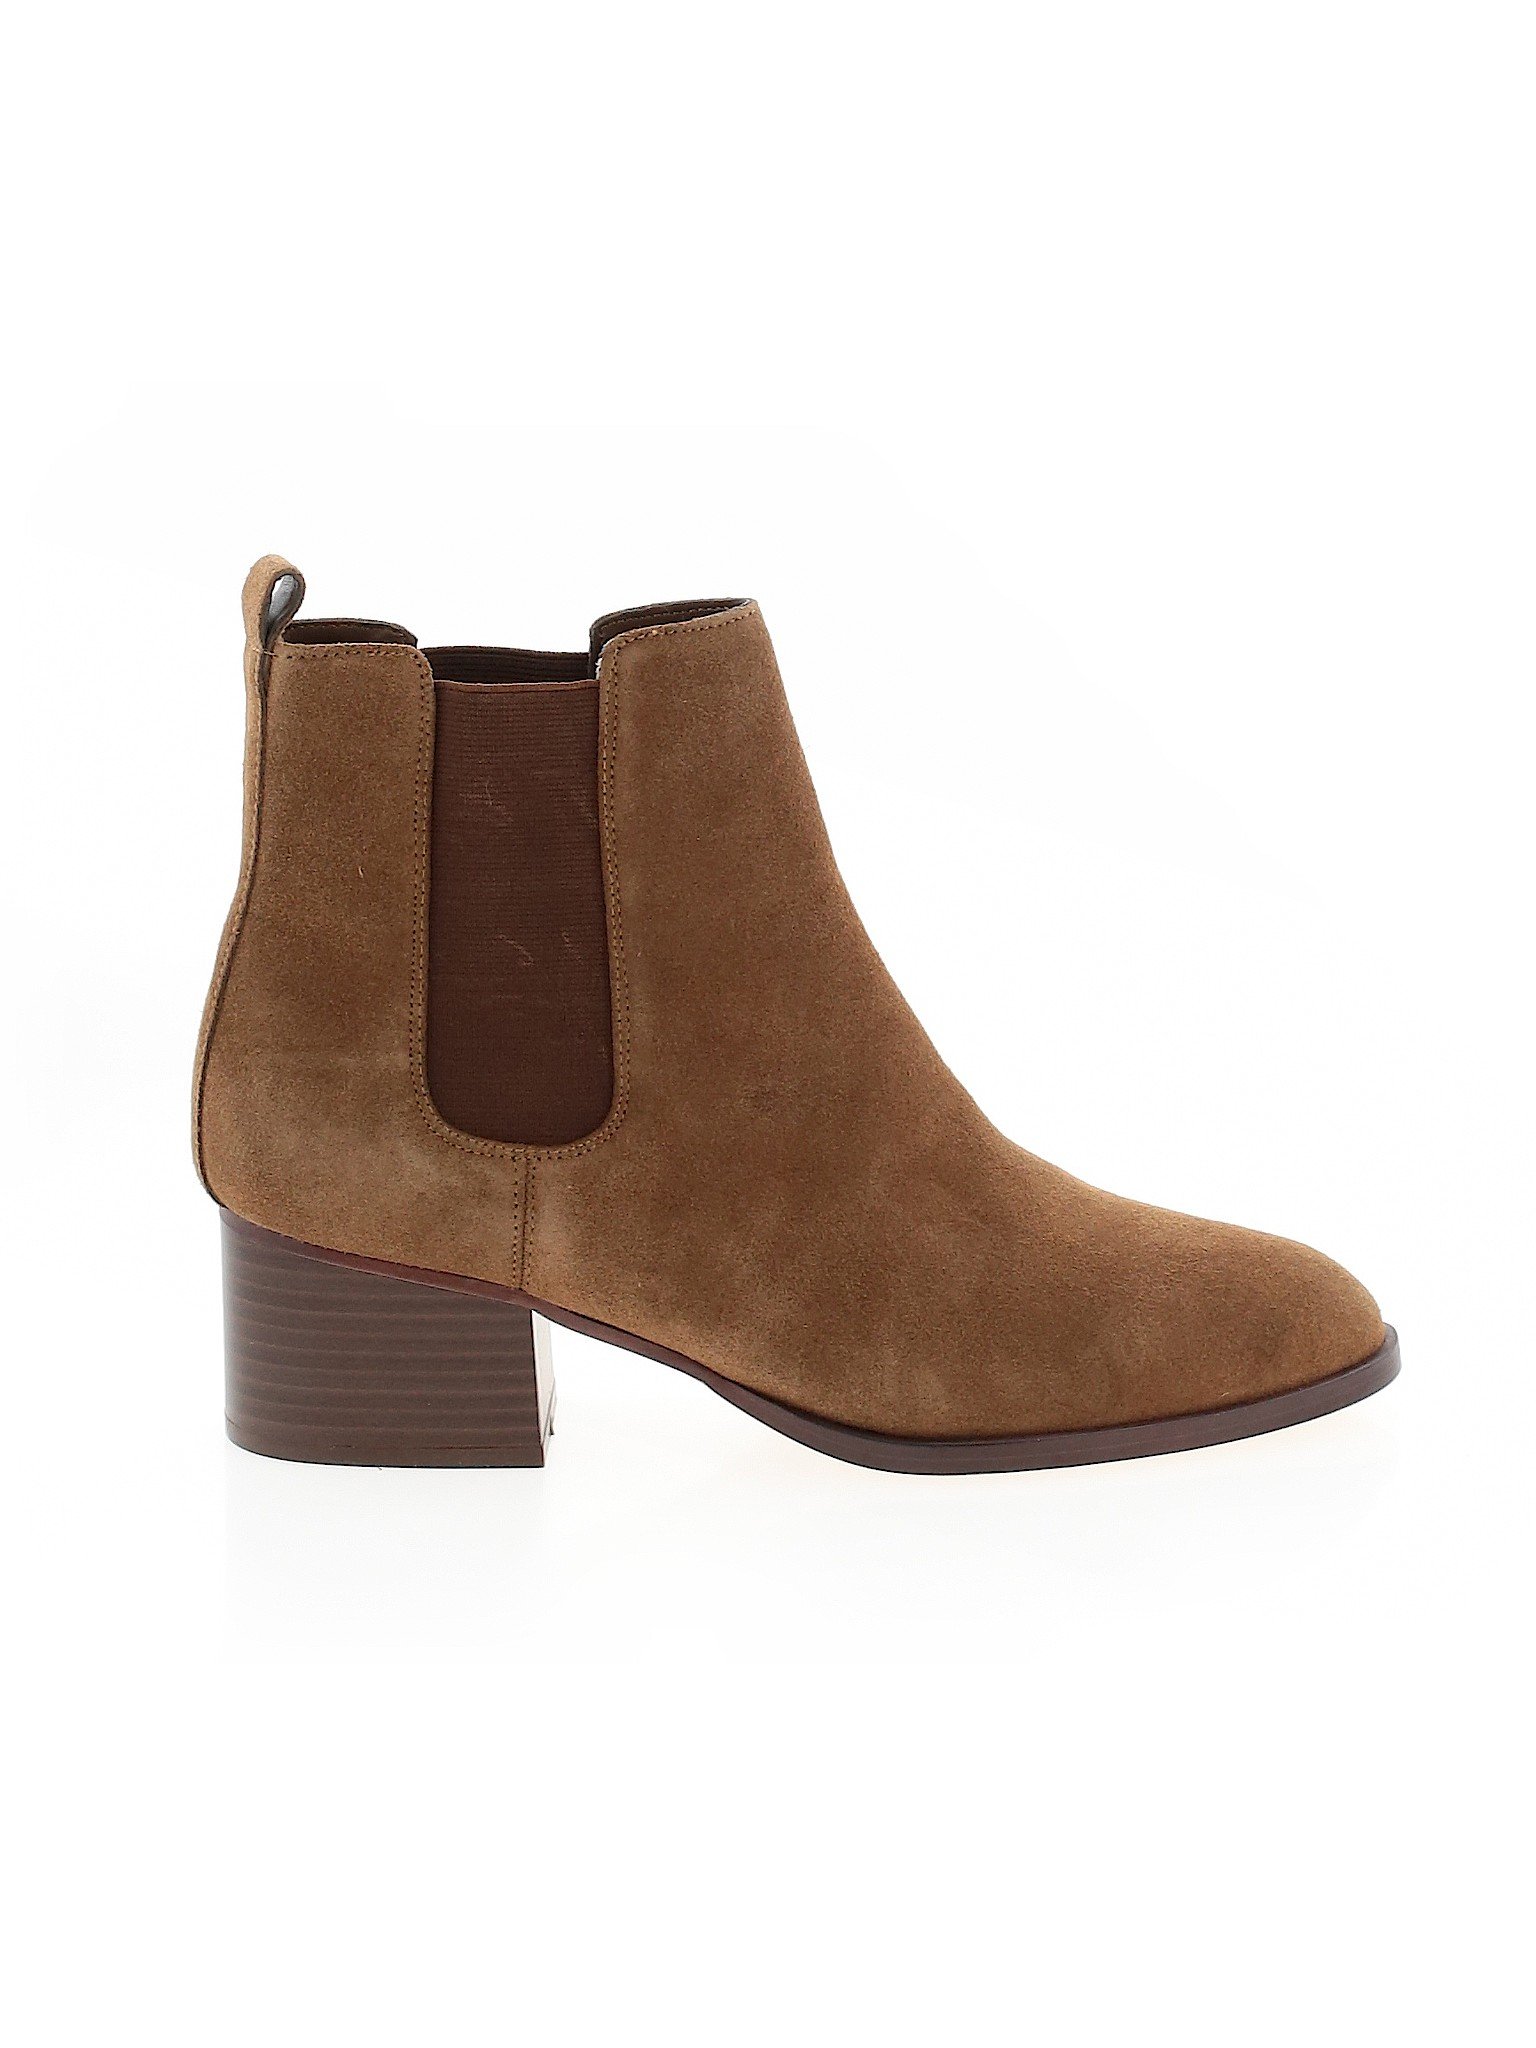 Gap Women Brown Ankle Boots US 10 | eBay